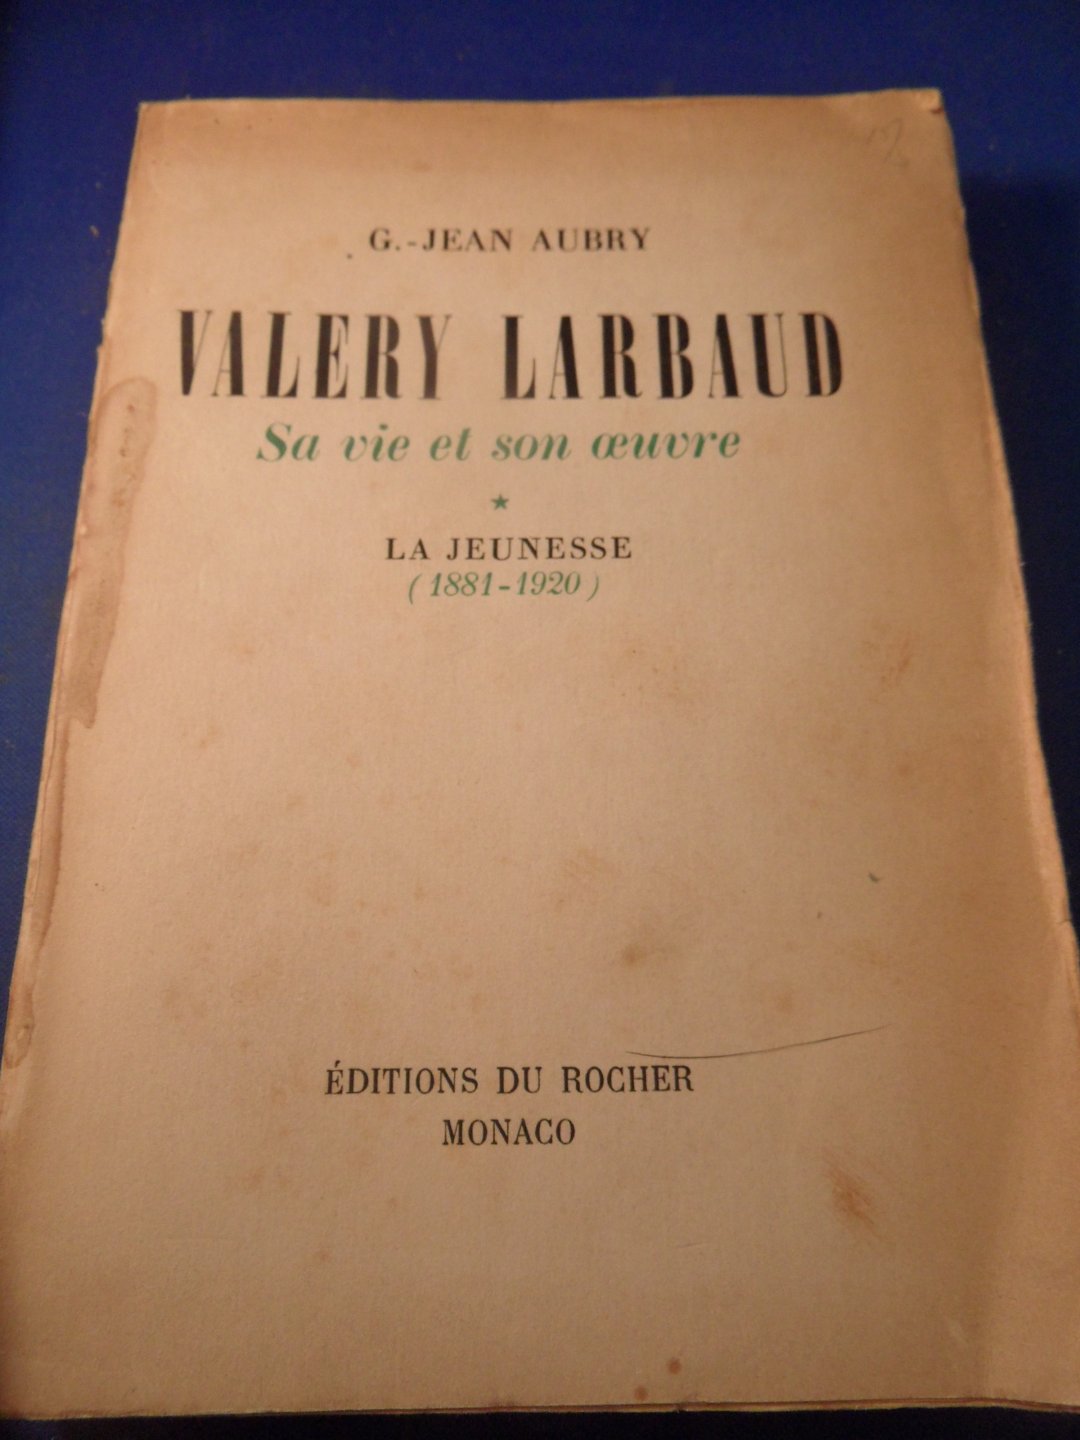 Aubry, G.Jean - Valery Larbaud sa vie et son oeuvre